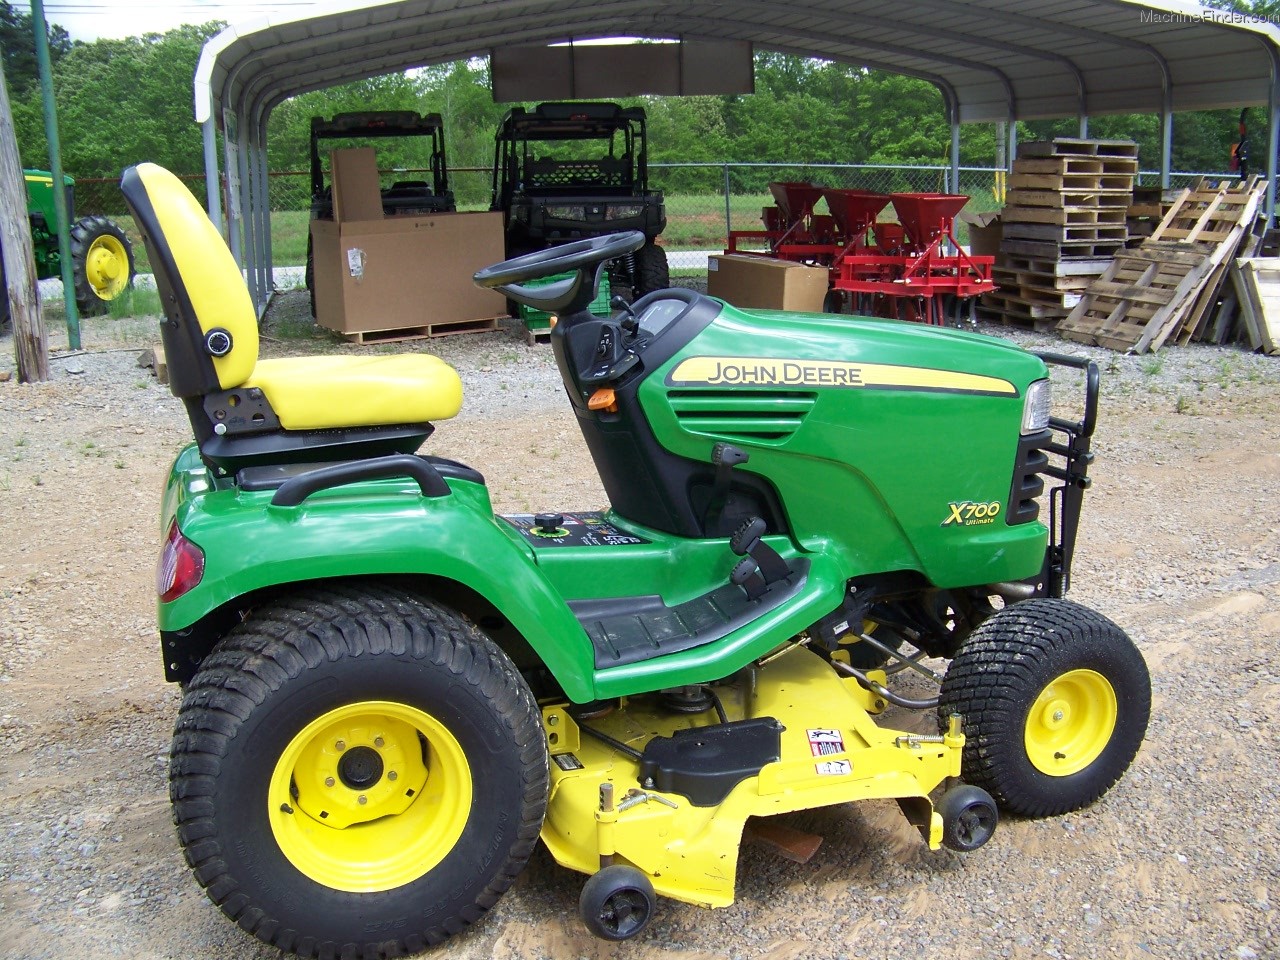 John Deere X700 ⌘ Signature Series Lawn Tractors Information